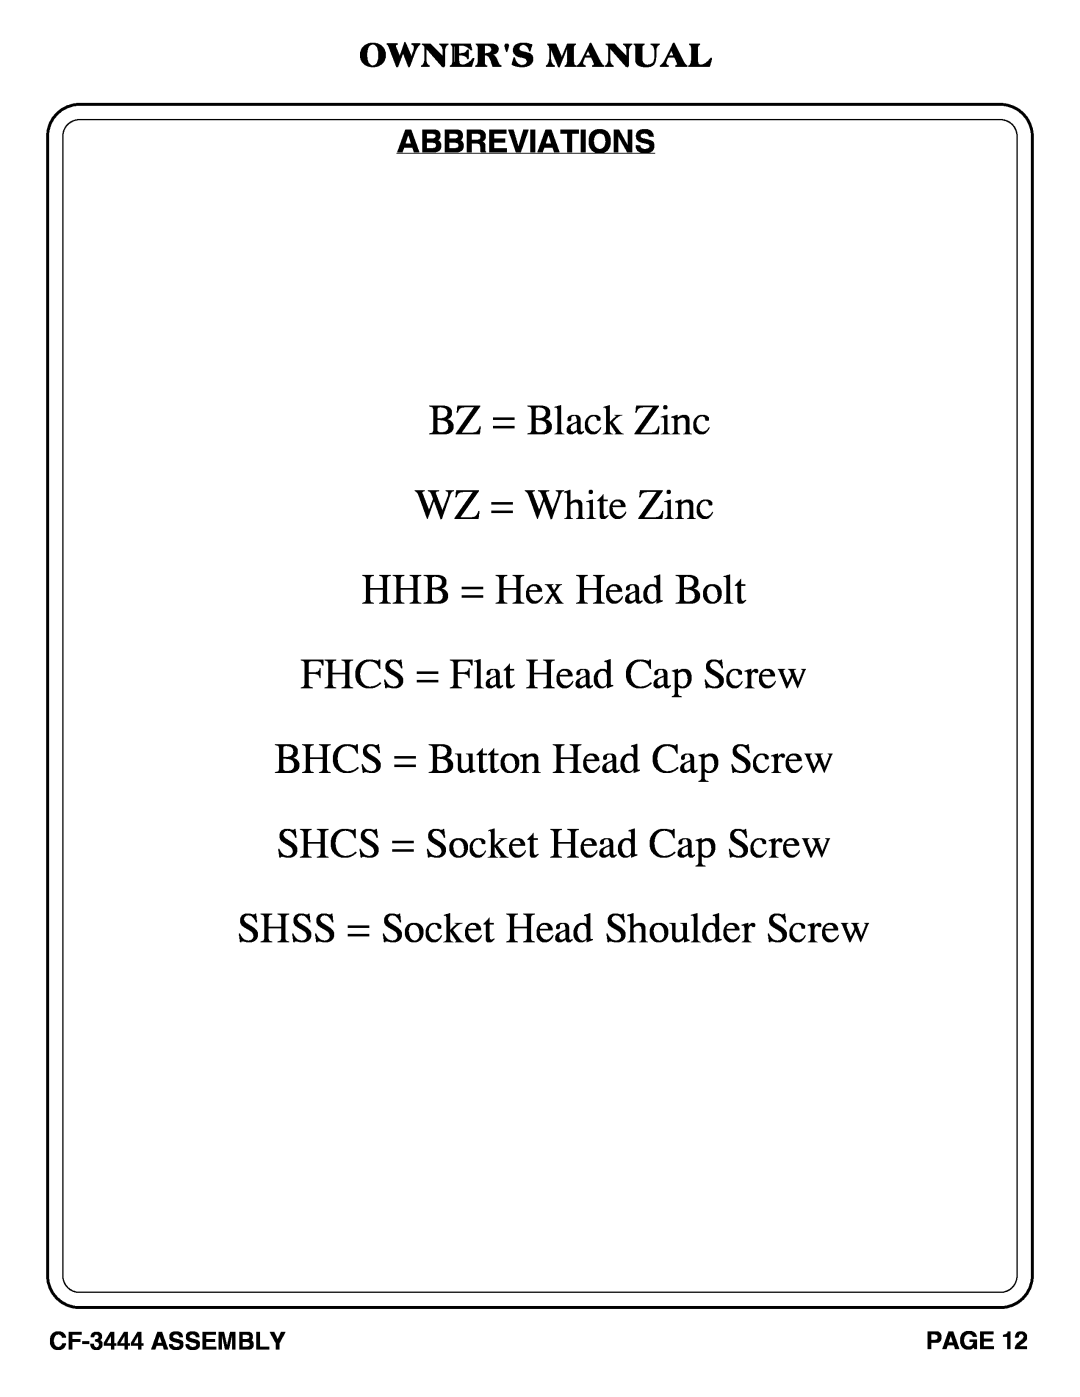 Hoist Fitness cf-3444 owner manual Owners Manual Abbreviations, BZ = Black Zinc WZ = White Zinc HHB = Hex Head Bolt, Page 